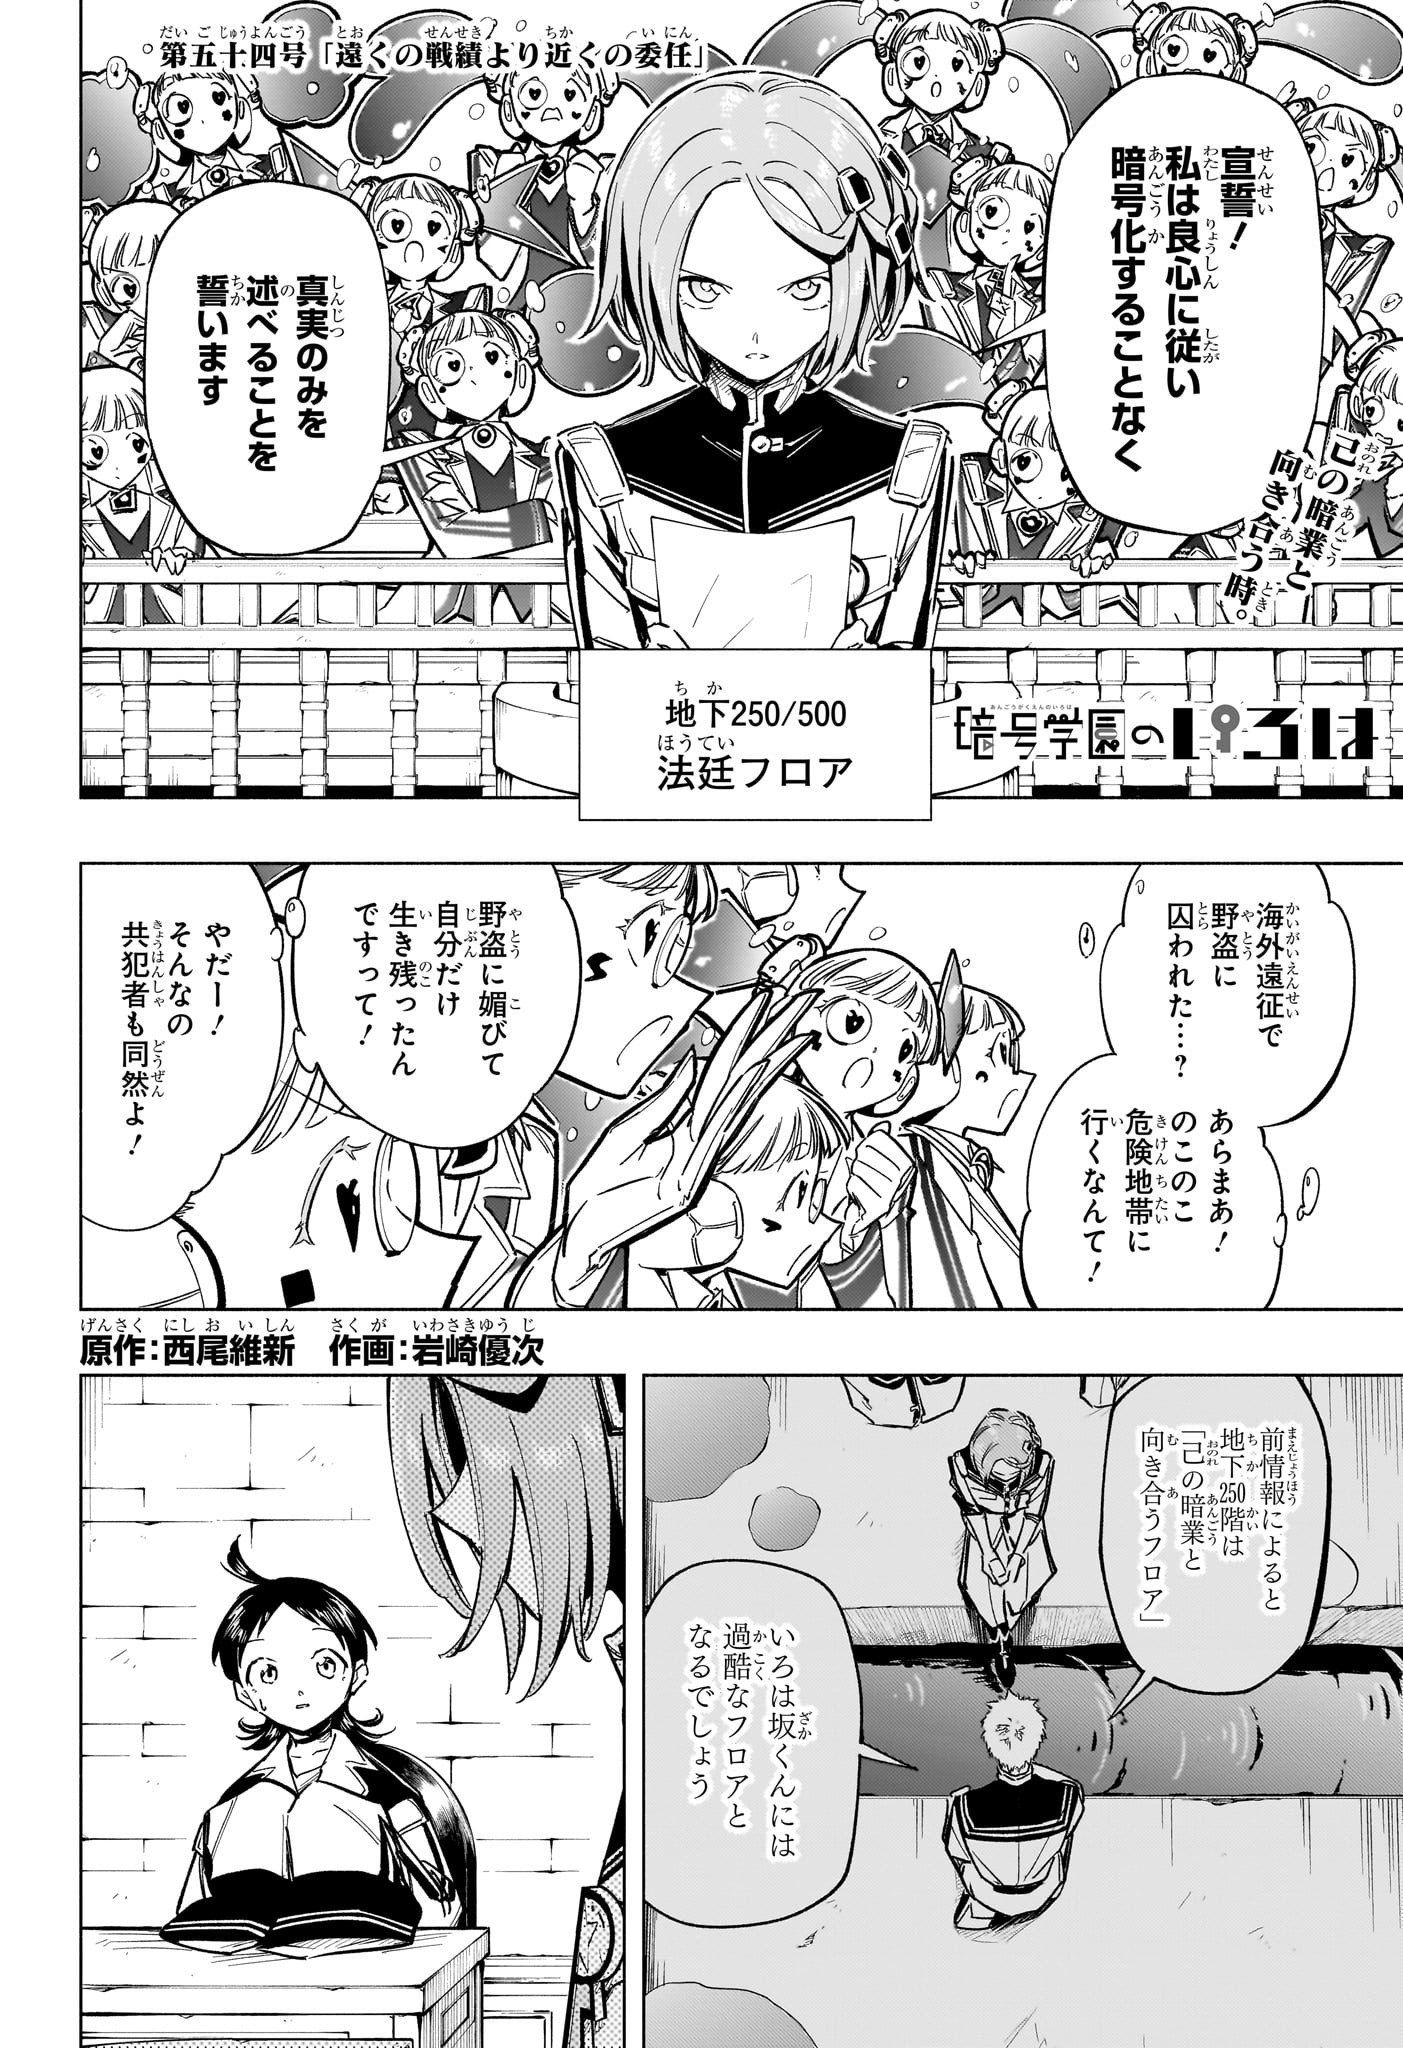 Angou Gakuen no Iroha - Chapter 54 - Page 2